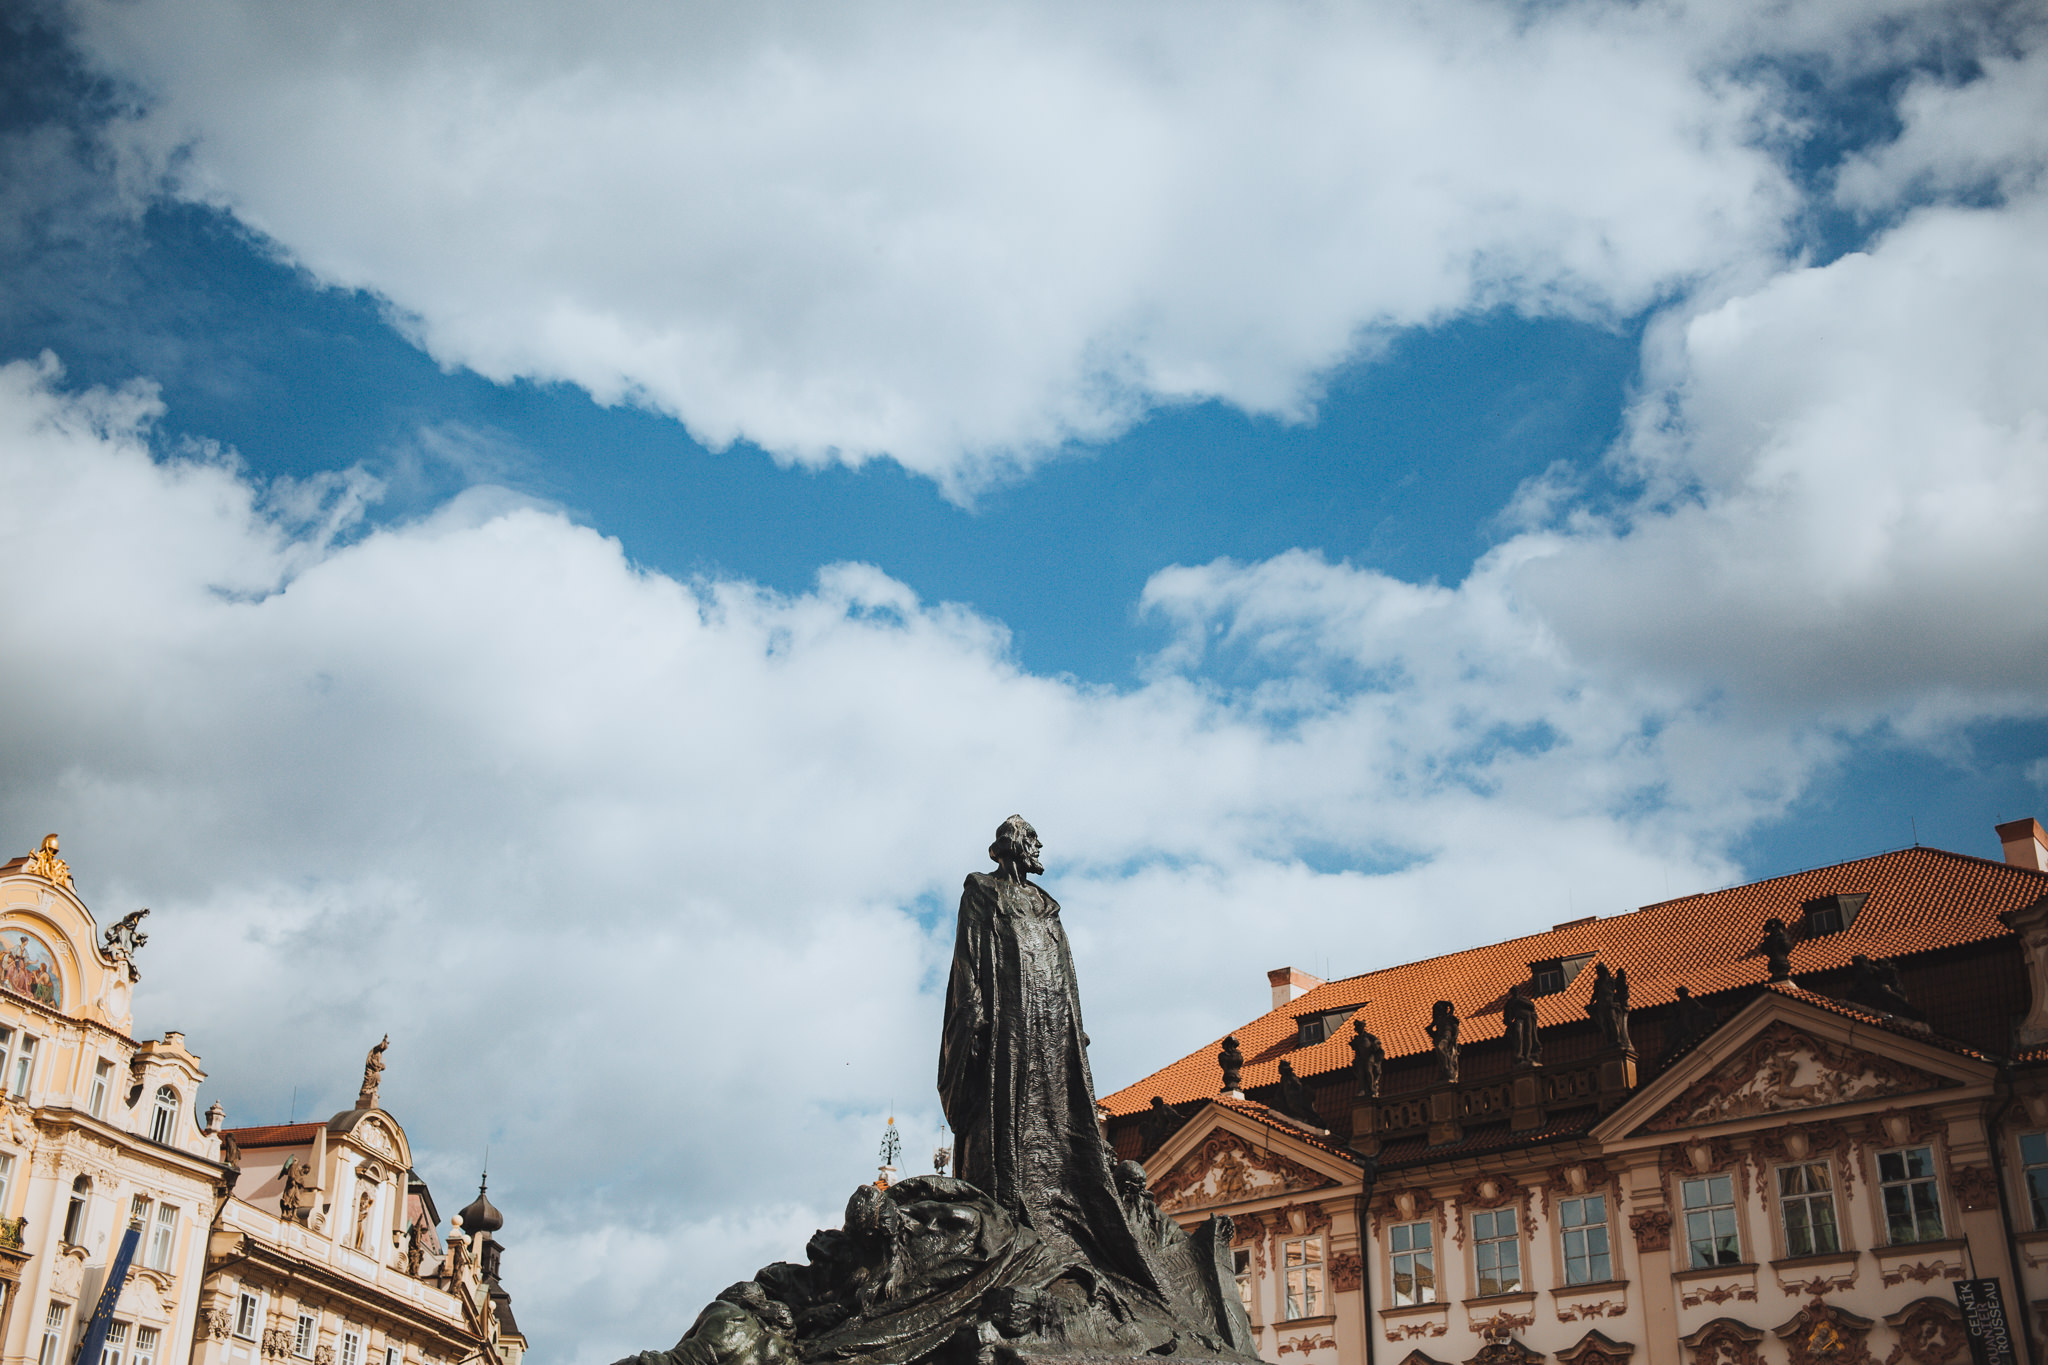   Jan Hus - a Czech priest and philosopher  